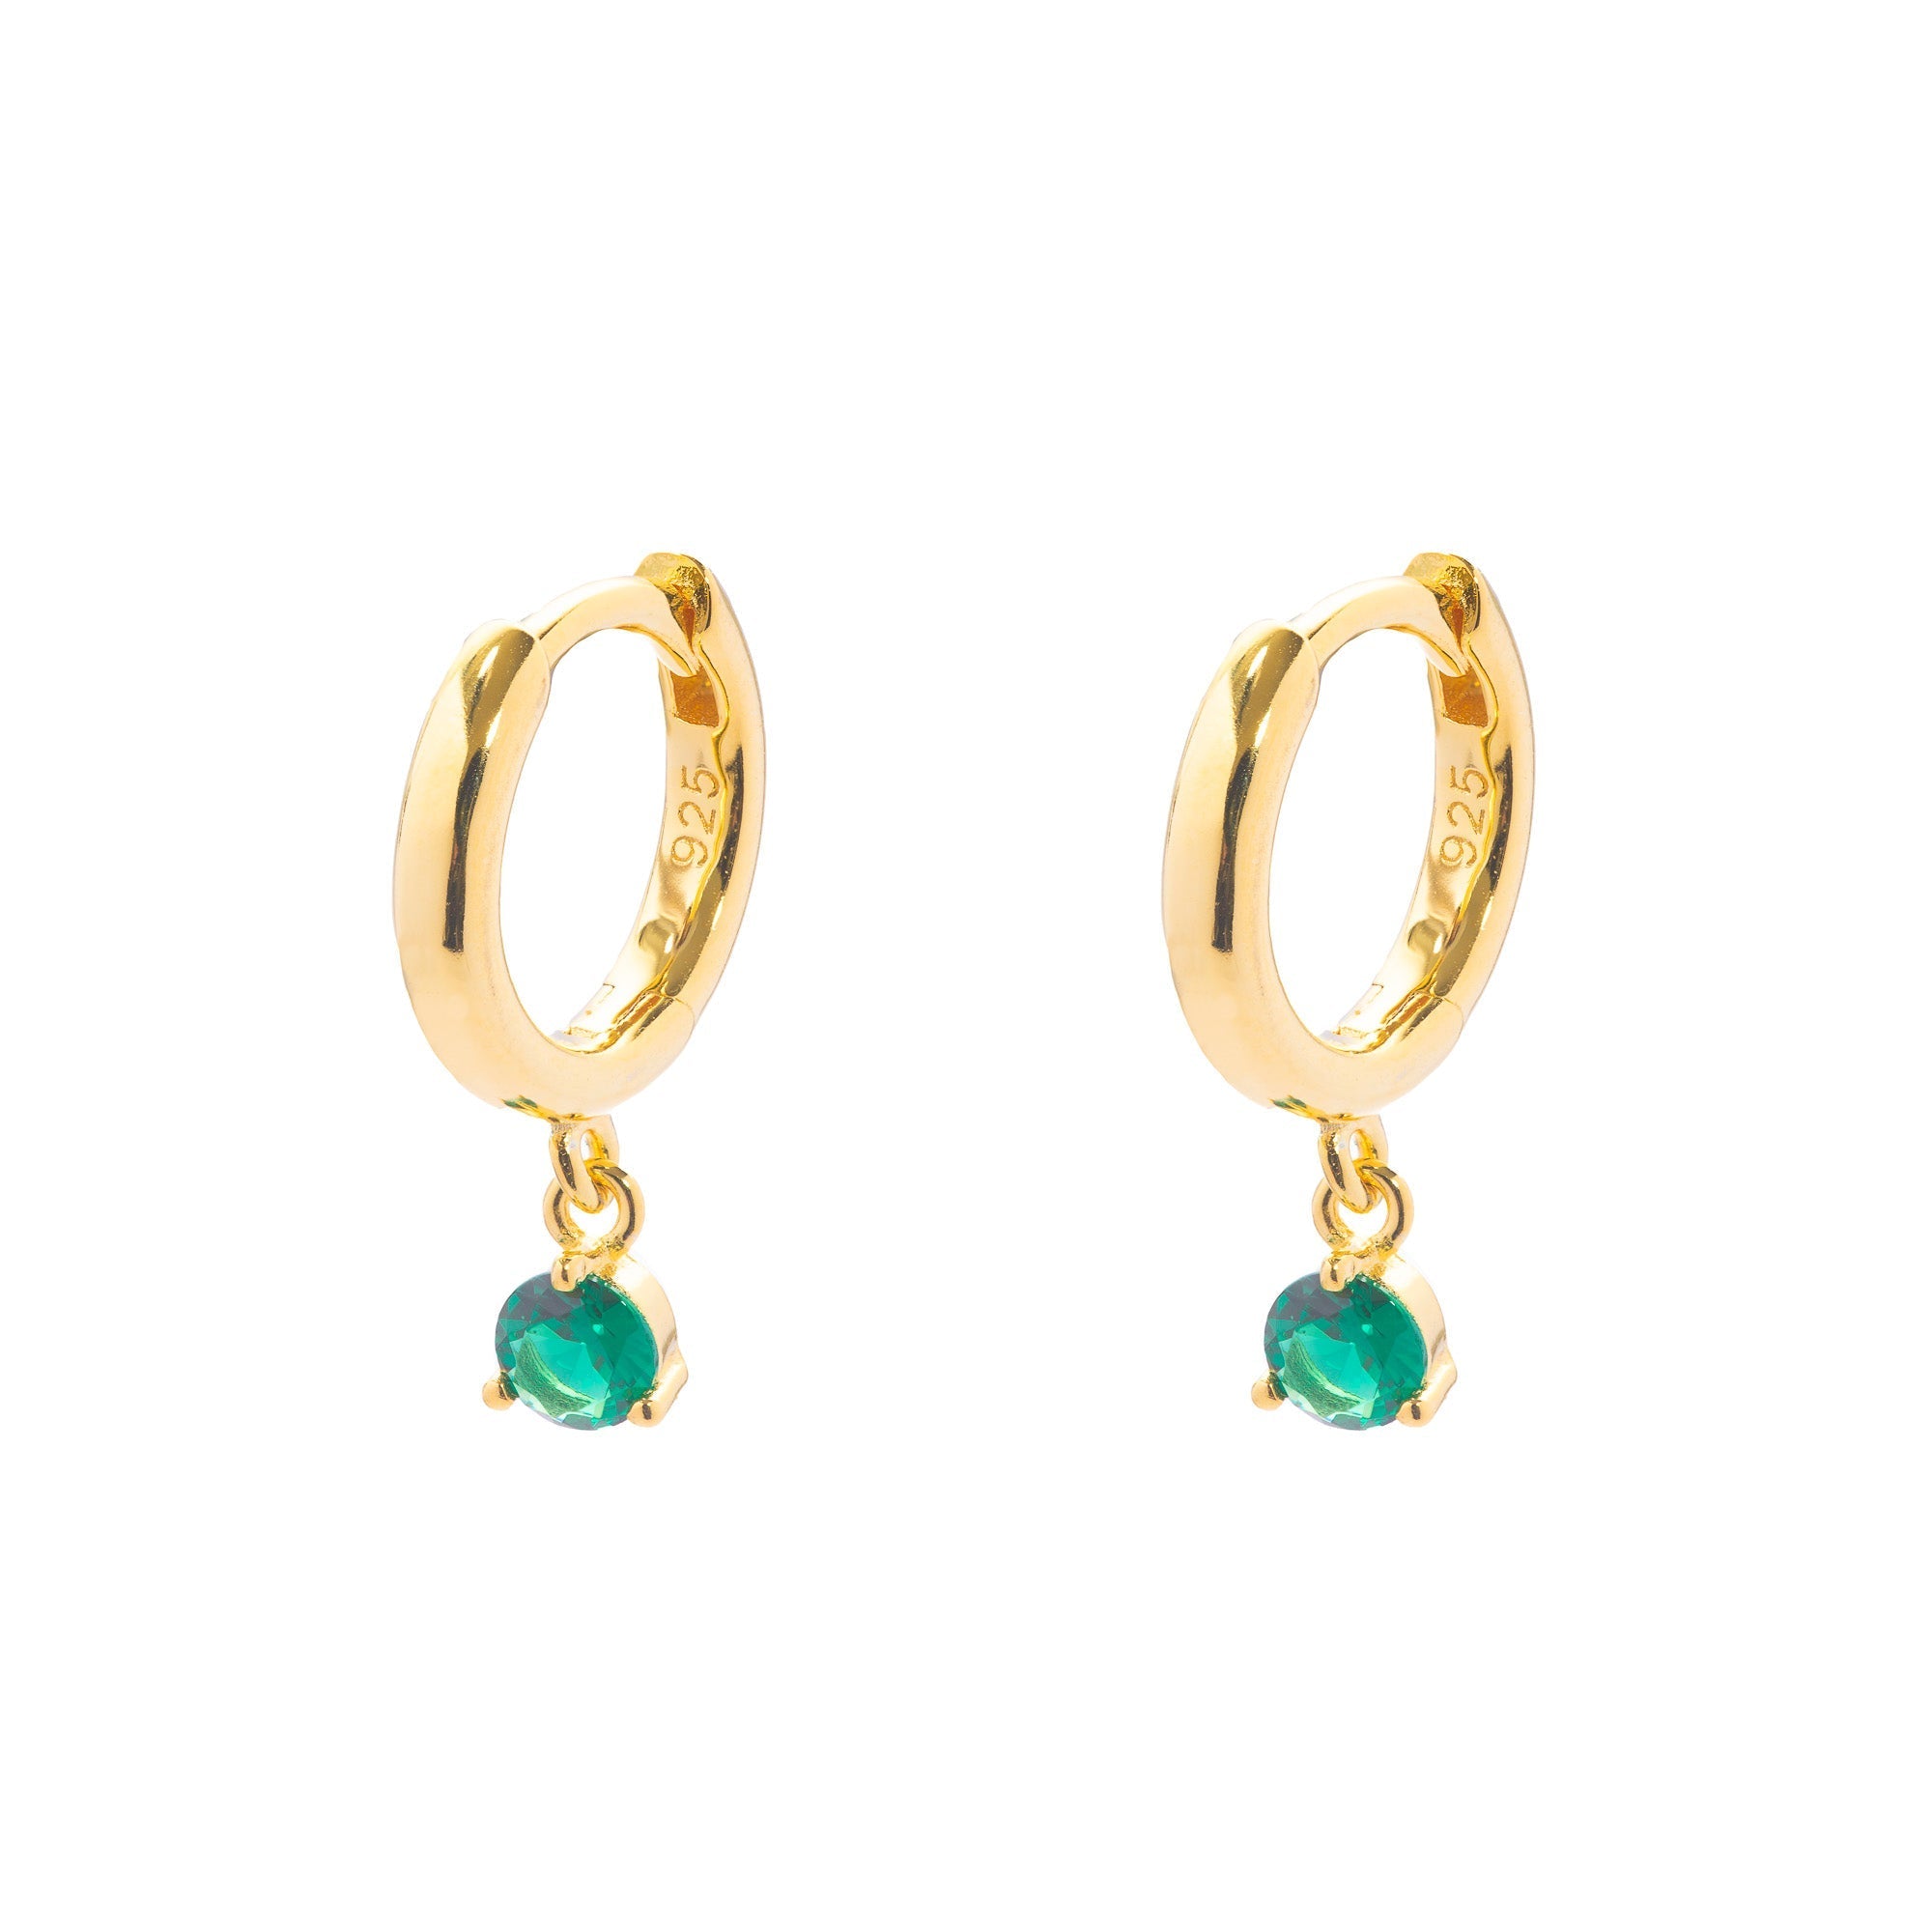 Duo Jewellery Earrings Yellow Gold / Aqua Ava Round Drop Earrings